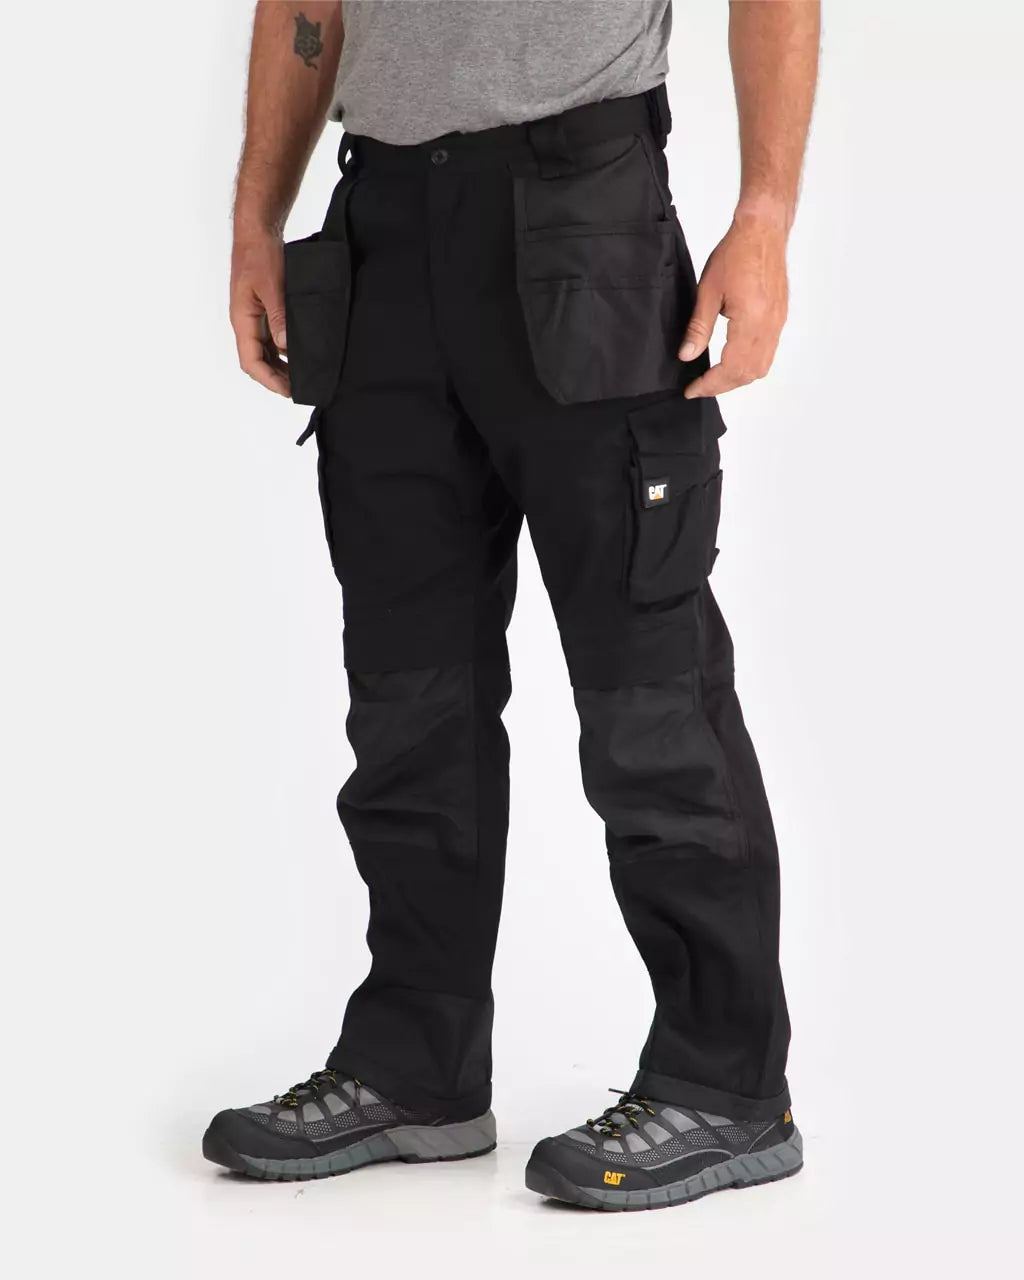 cat workwear men trademark trouser black c172 16 fl